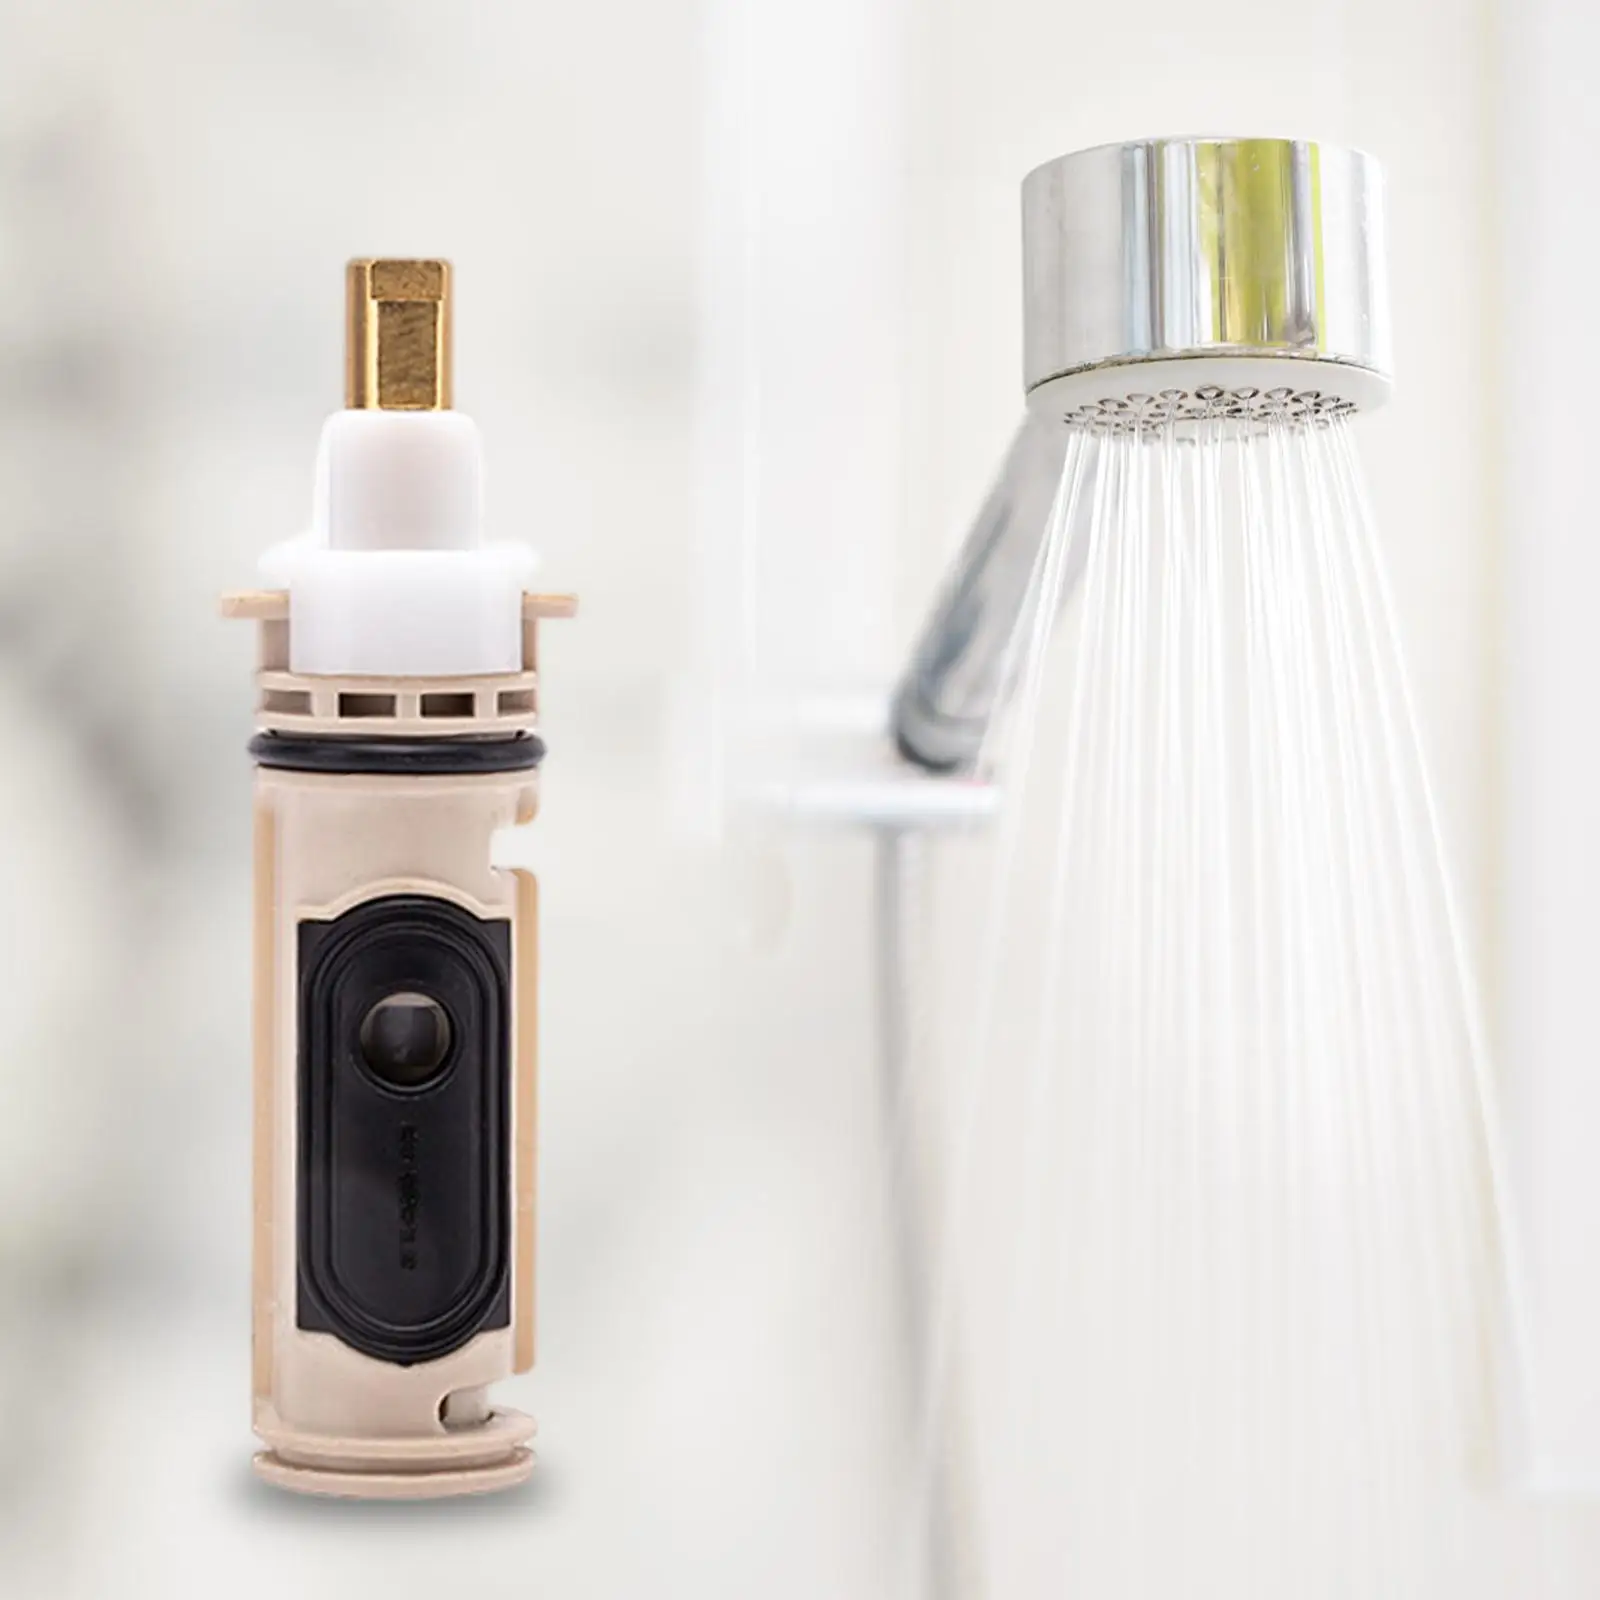 Durable Shower Cartridge Kit for One Handle Faucets Shower Universal Valve Cartridge Repair